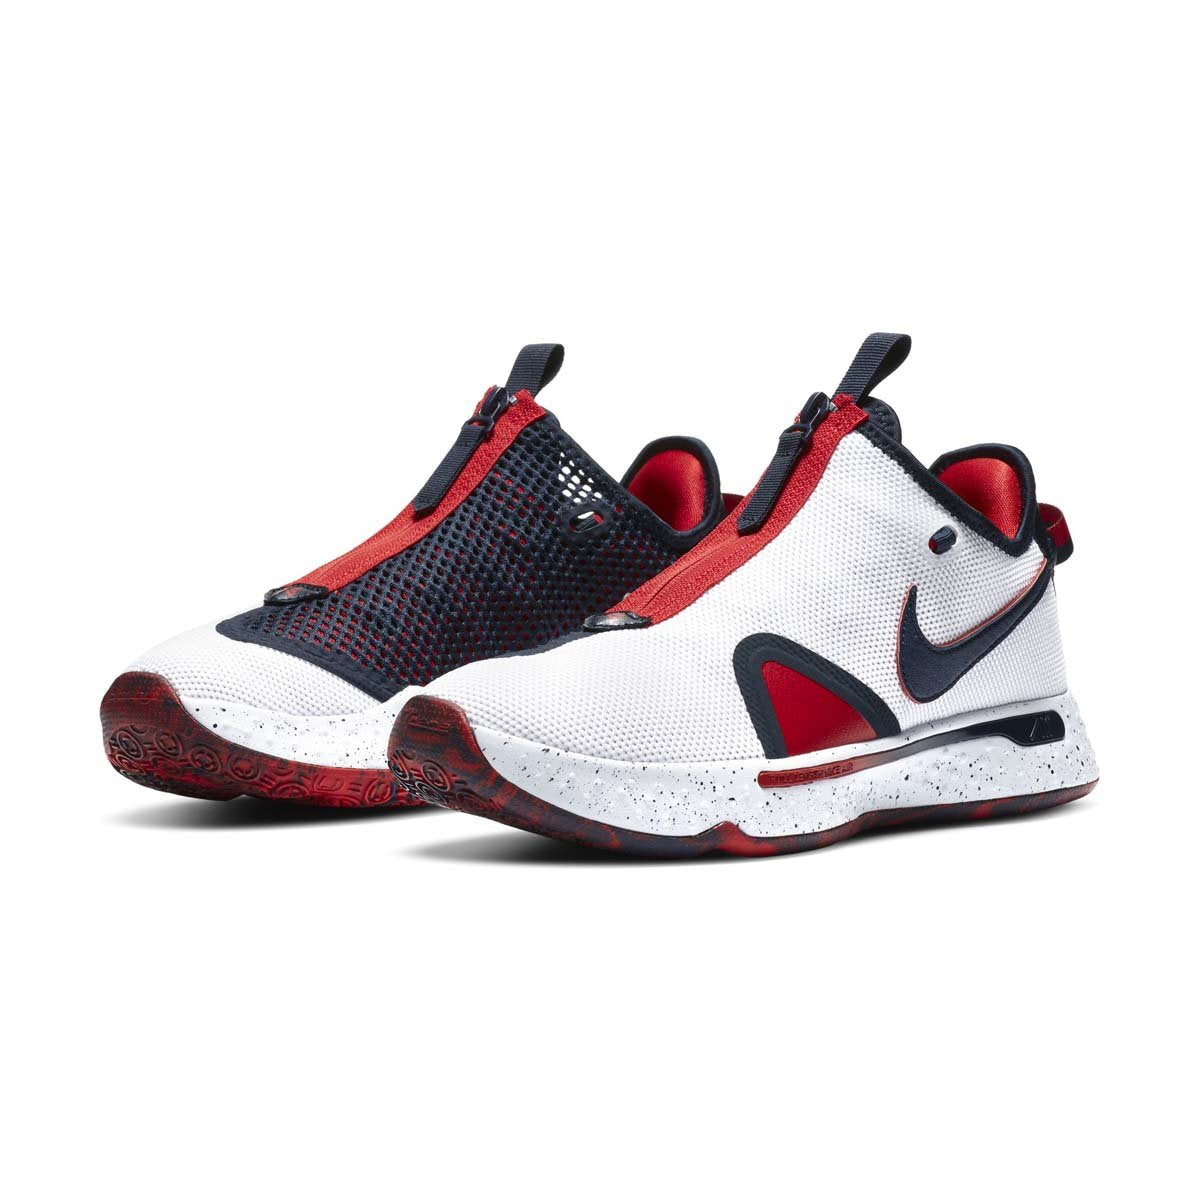 Nike PG 4: Sneaker Release Info: Paul George Shoe Price + More